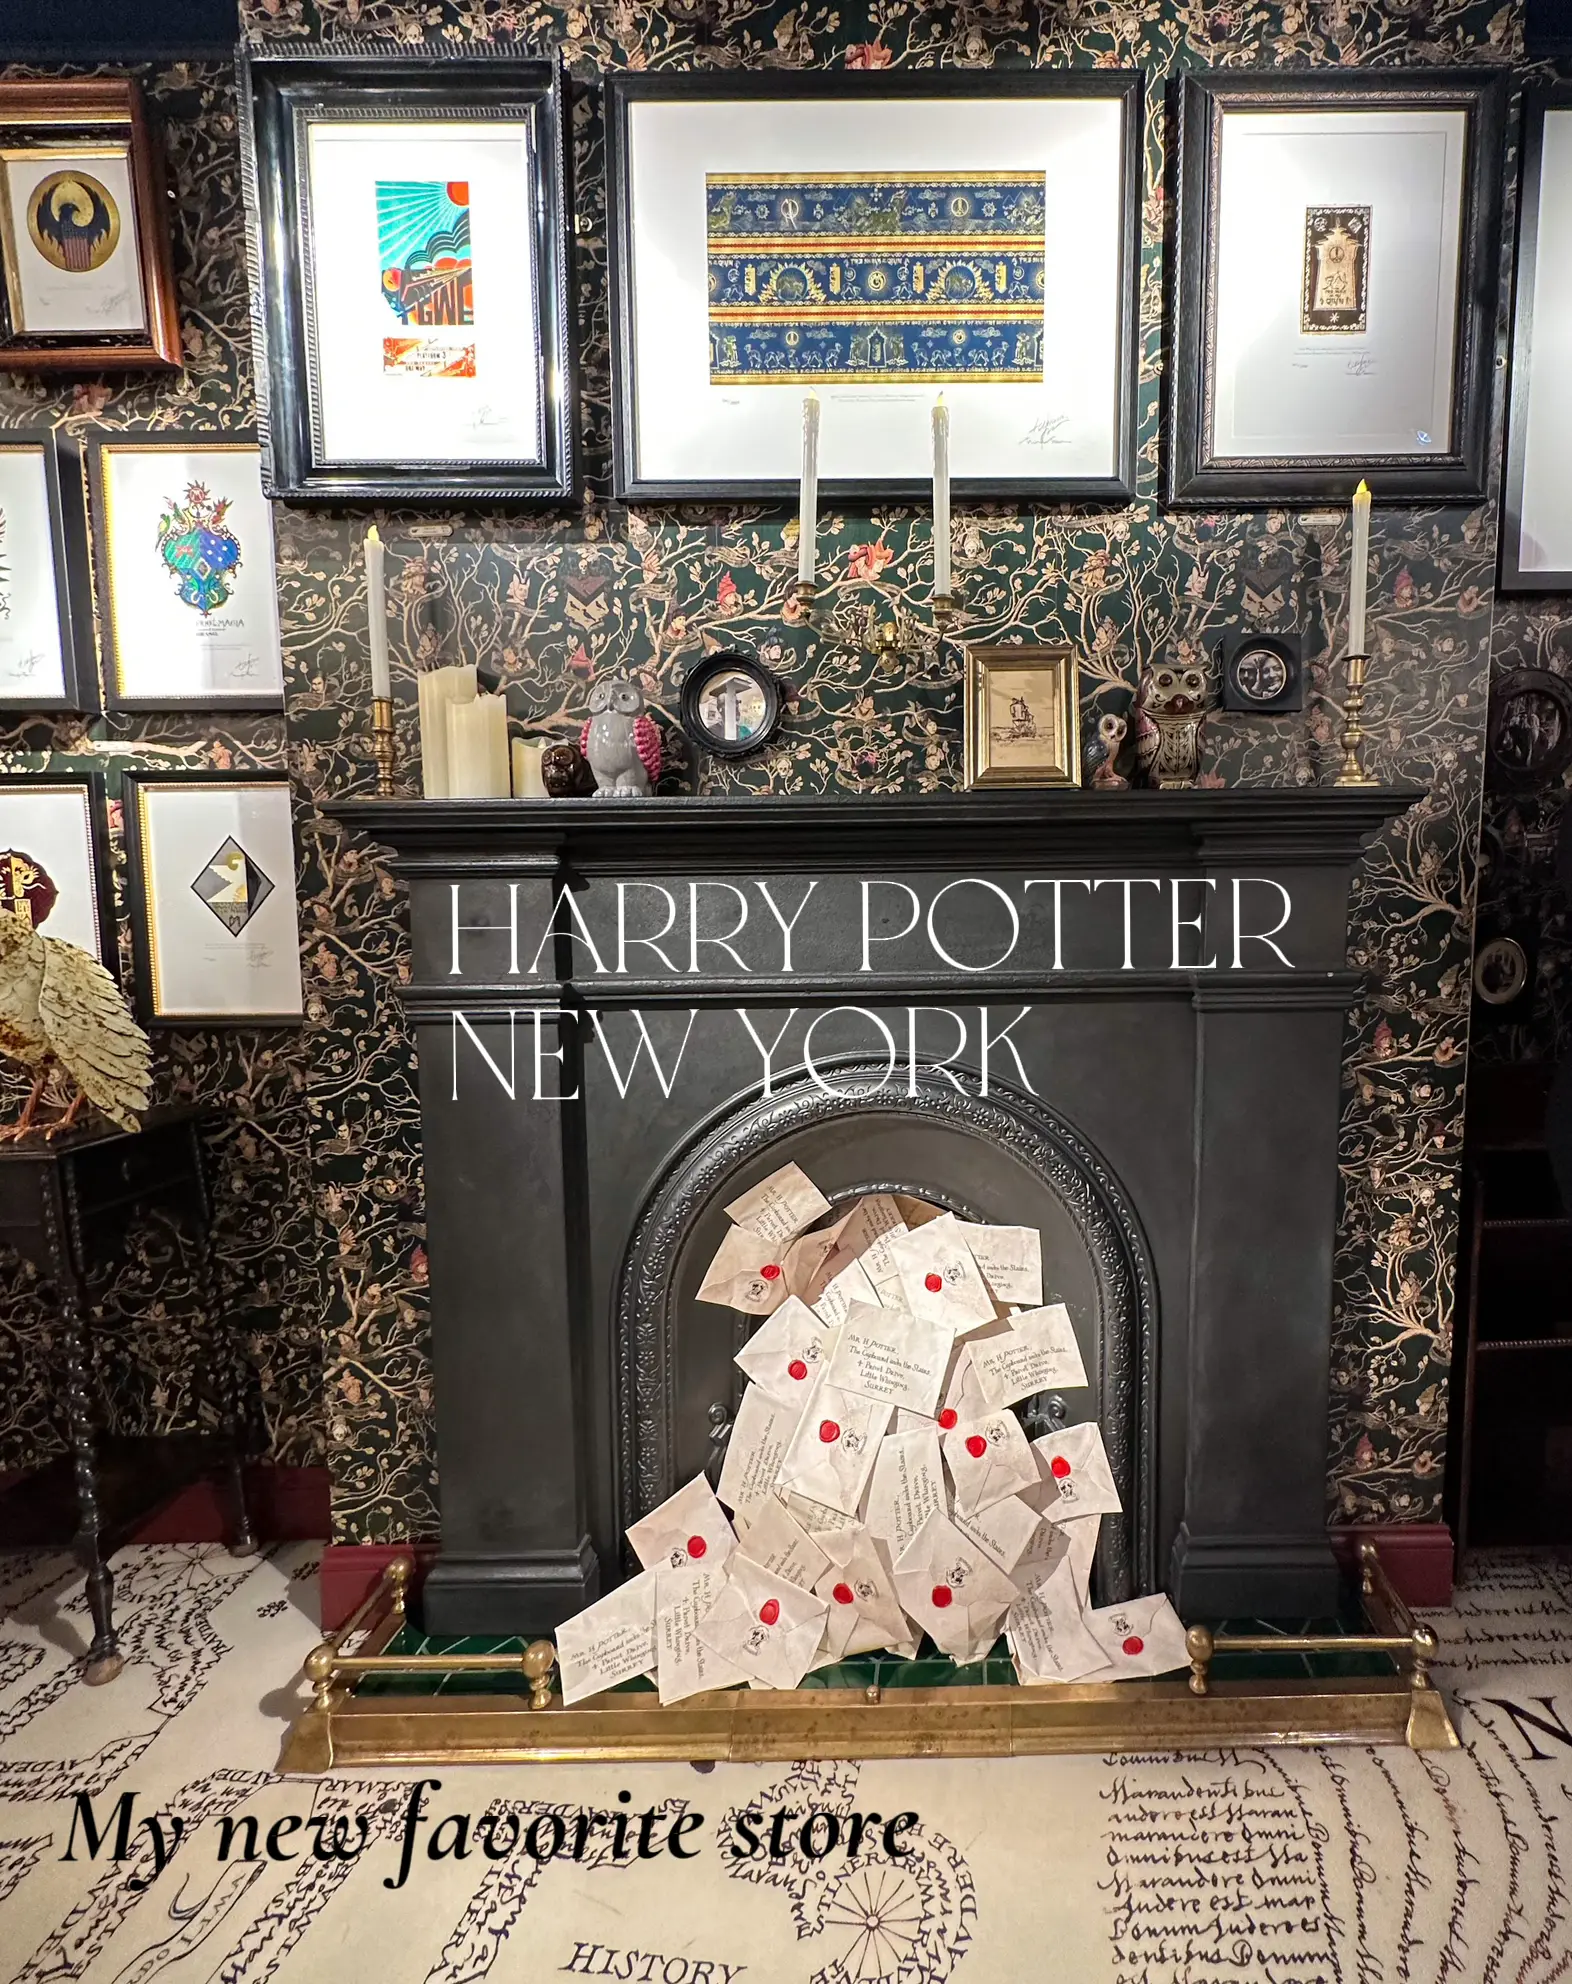 itty bittys Harry Potter Ron Weasley Stuffed Animal – Ann's Hallmark and  Creative